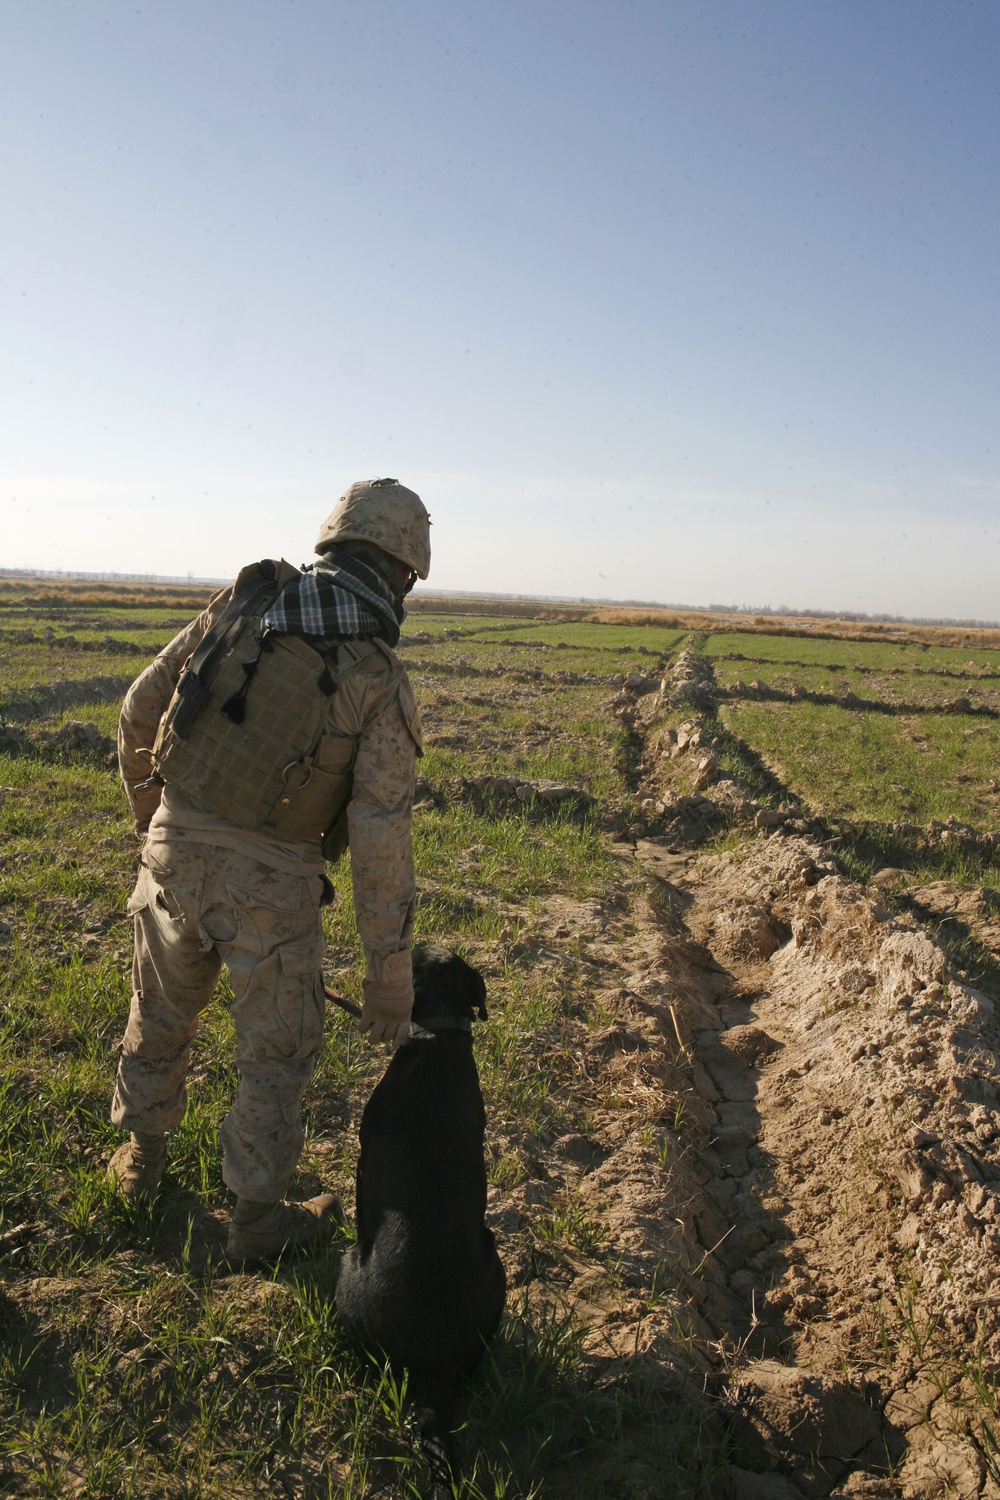 One dog, One Marine, One mission